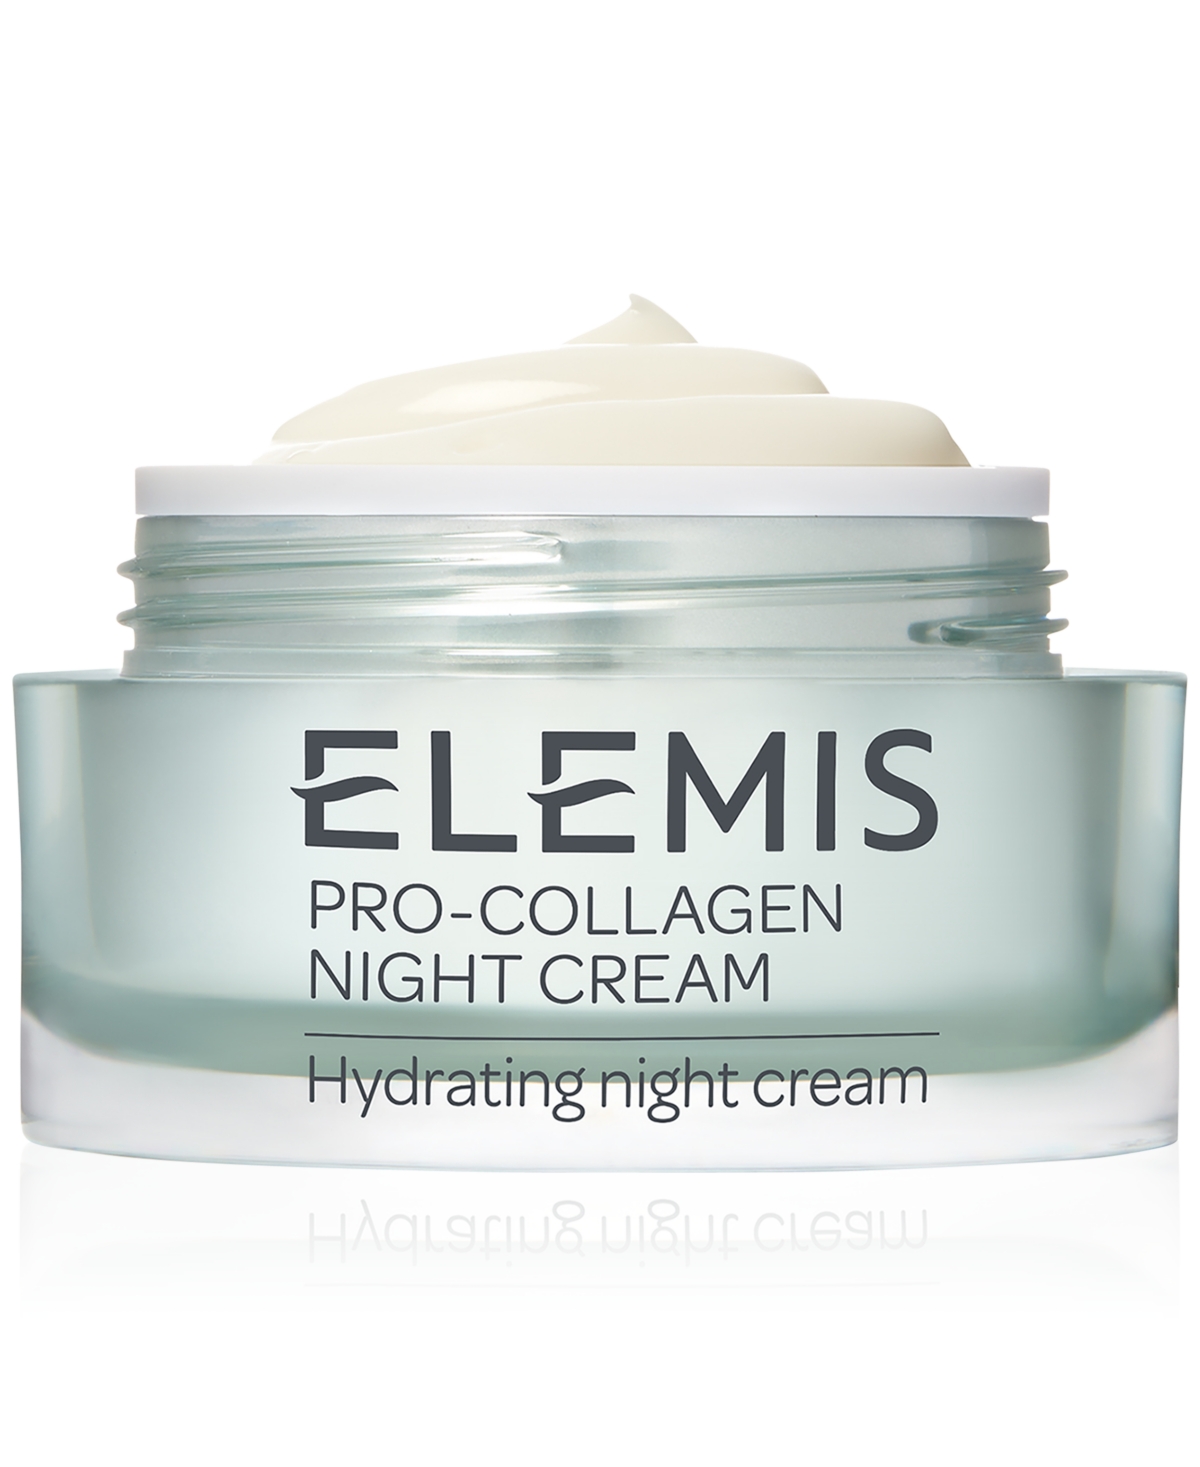 Pro-Collagen Night Cream, 1.7 oz.